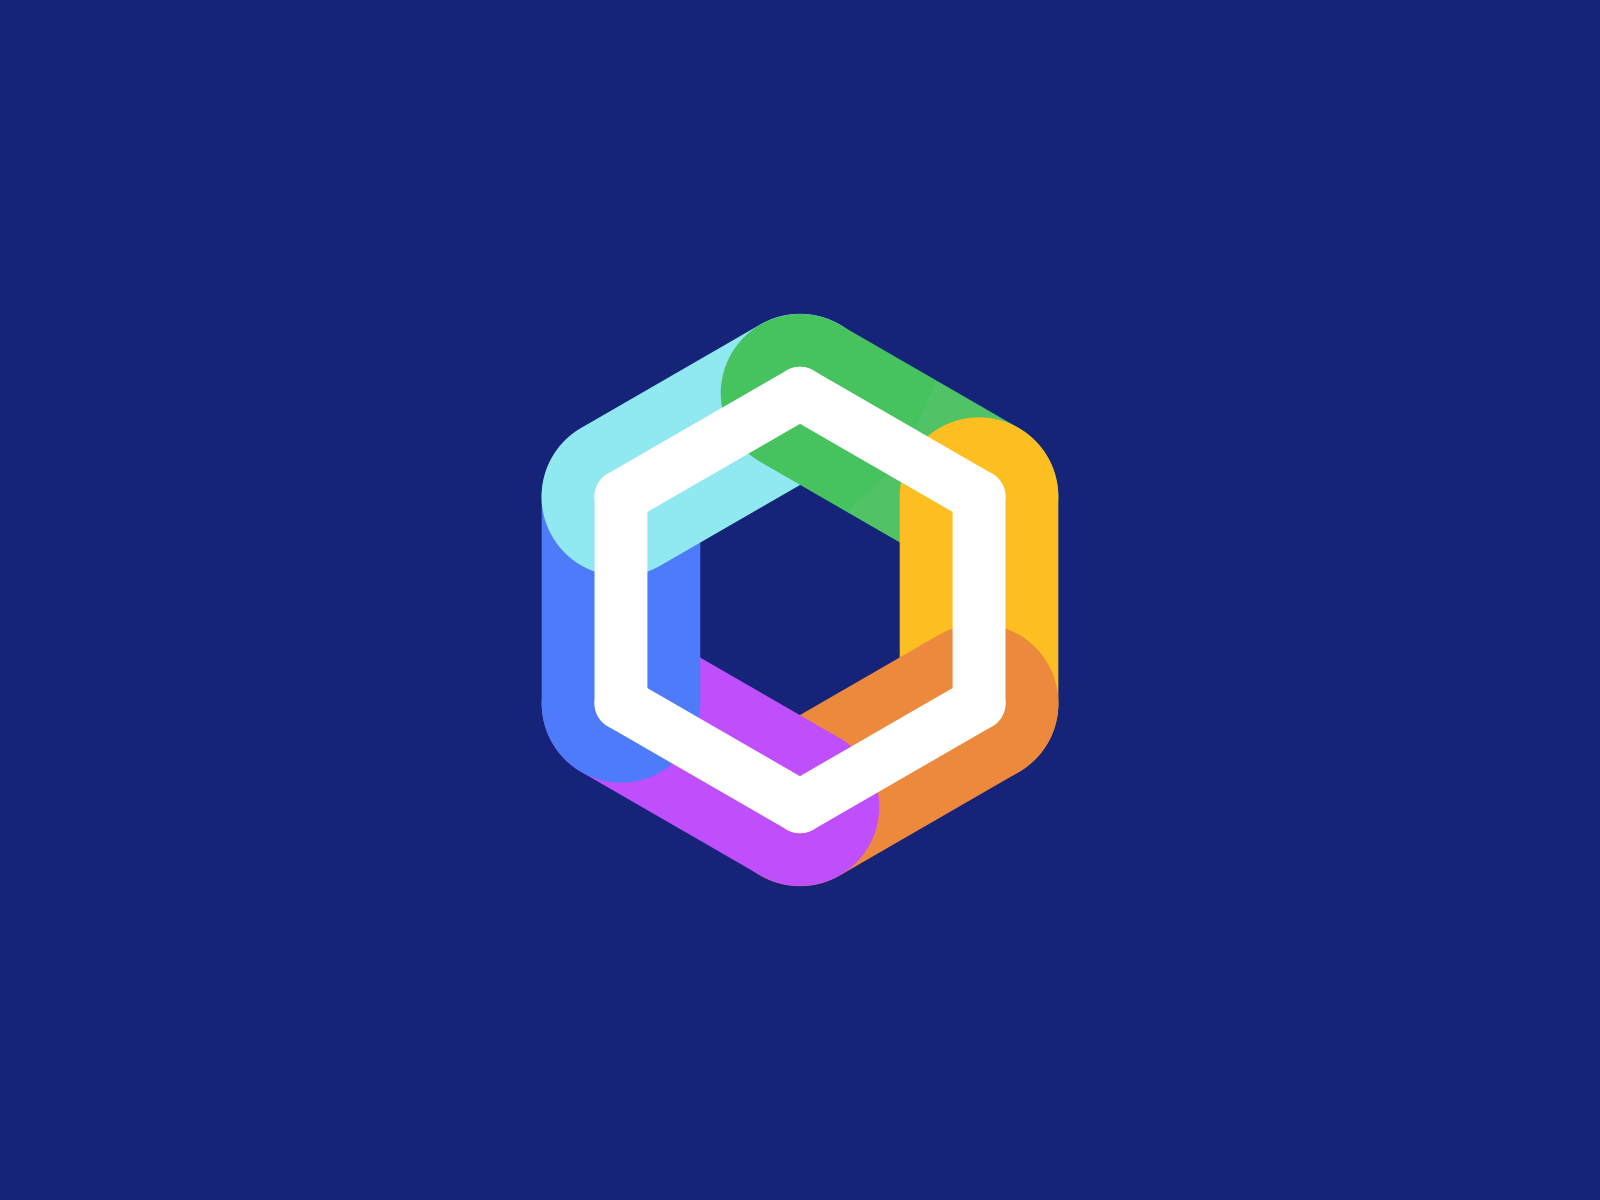 Hexagon Logo Images